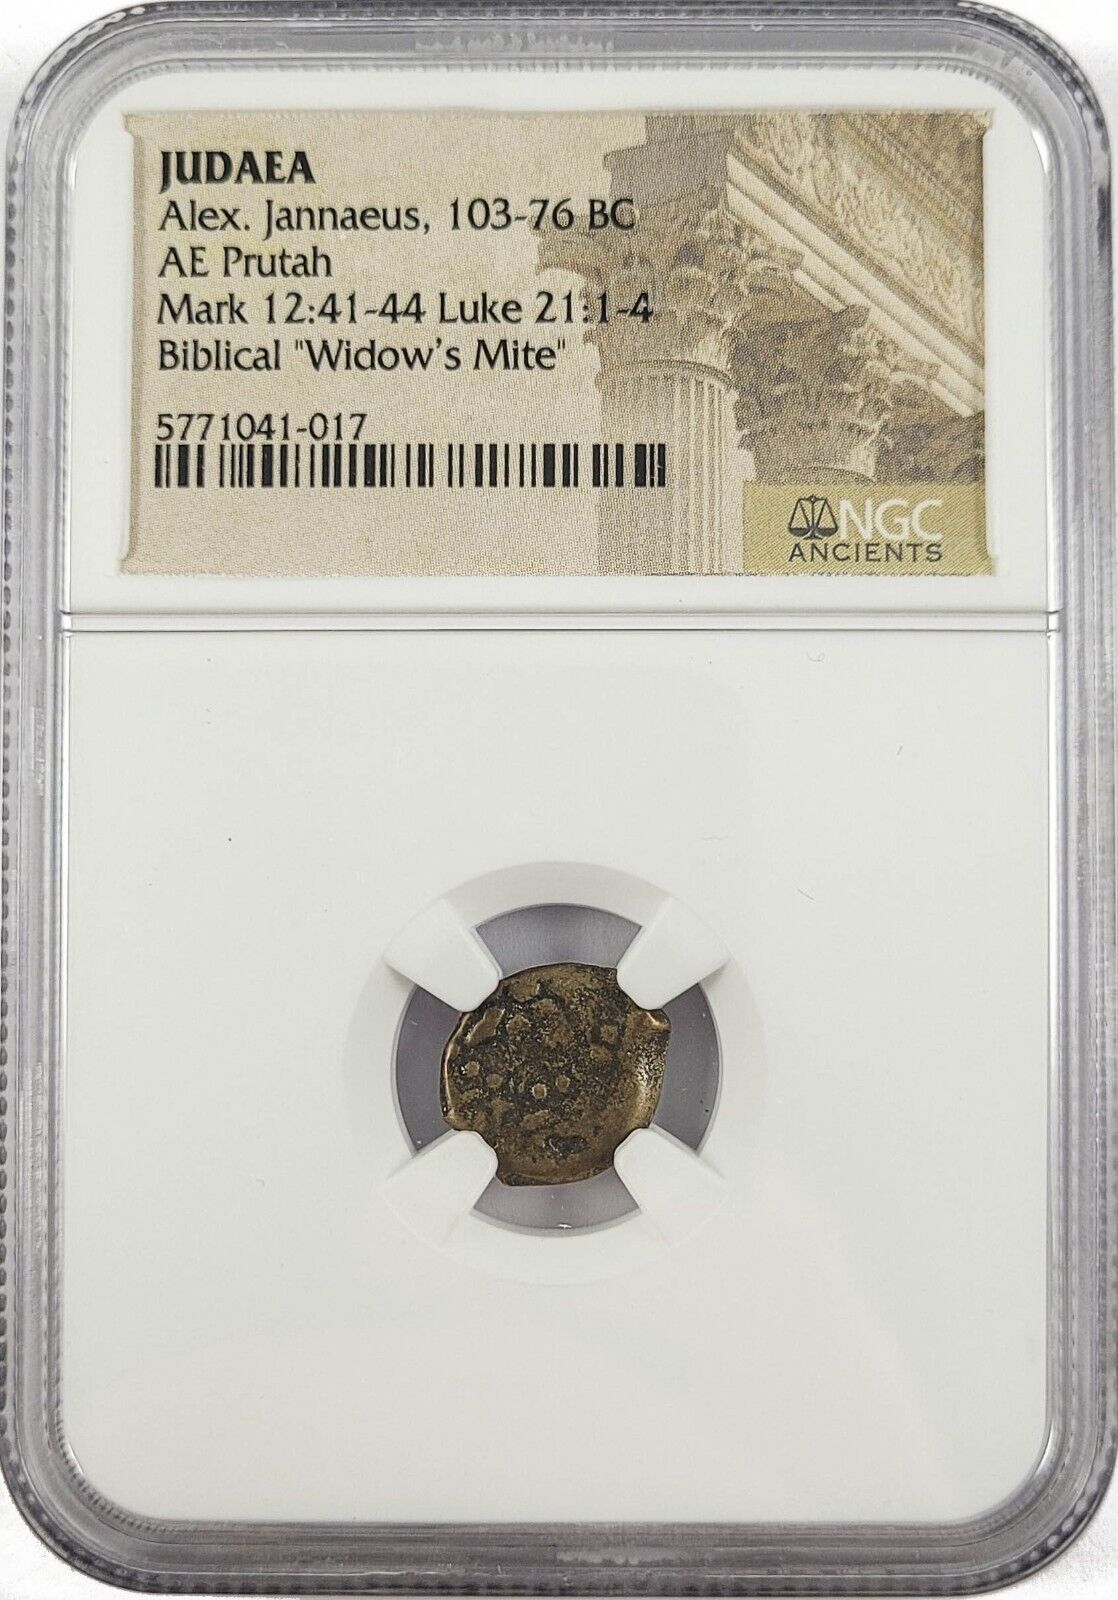 NGC Certified Widows Mite: Judean Prutah (103-76 BC) Lower Grade Biblical Coin